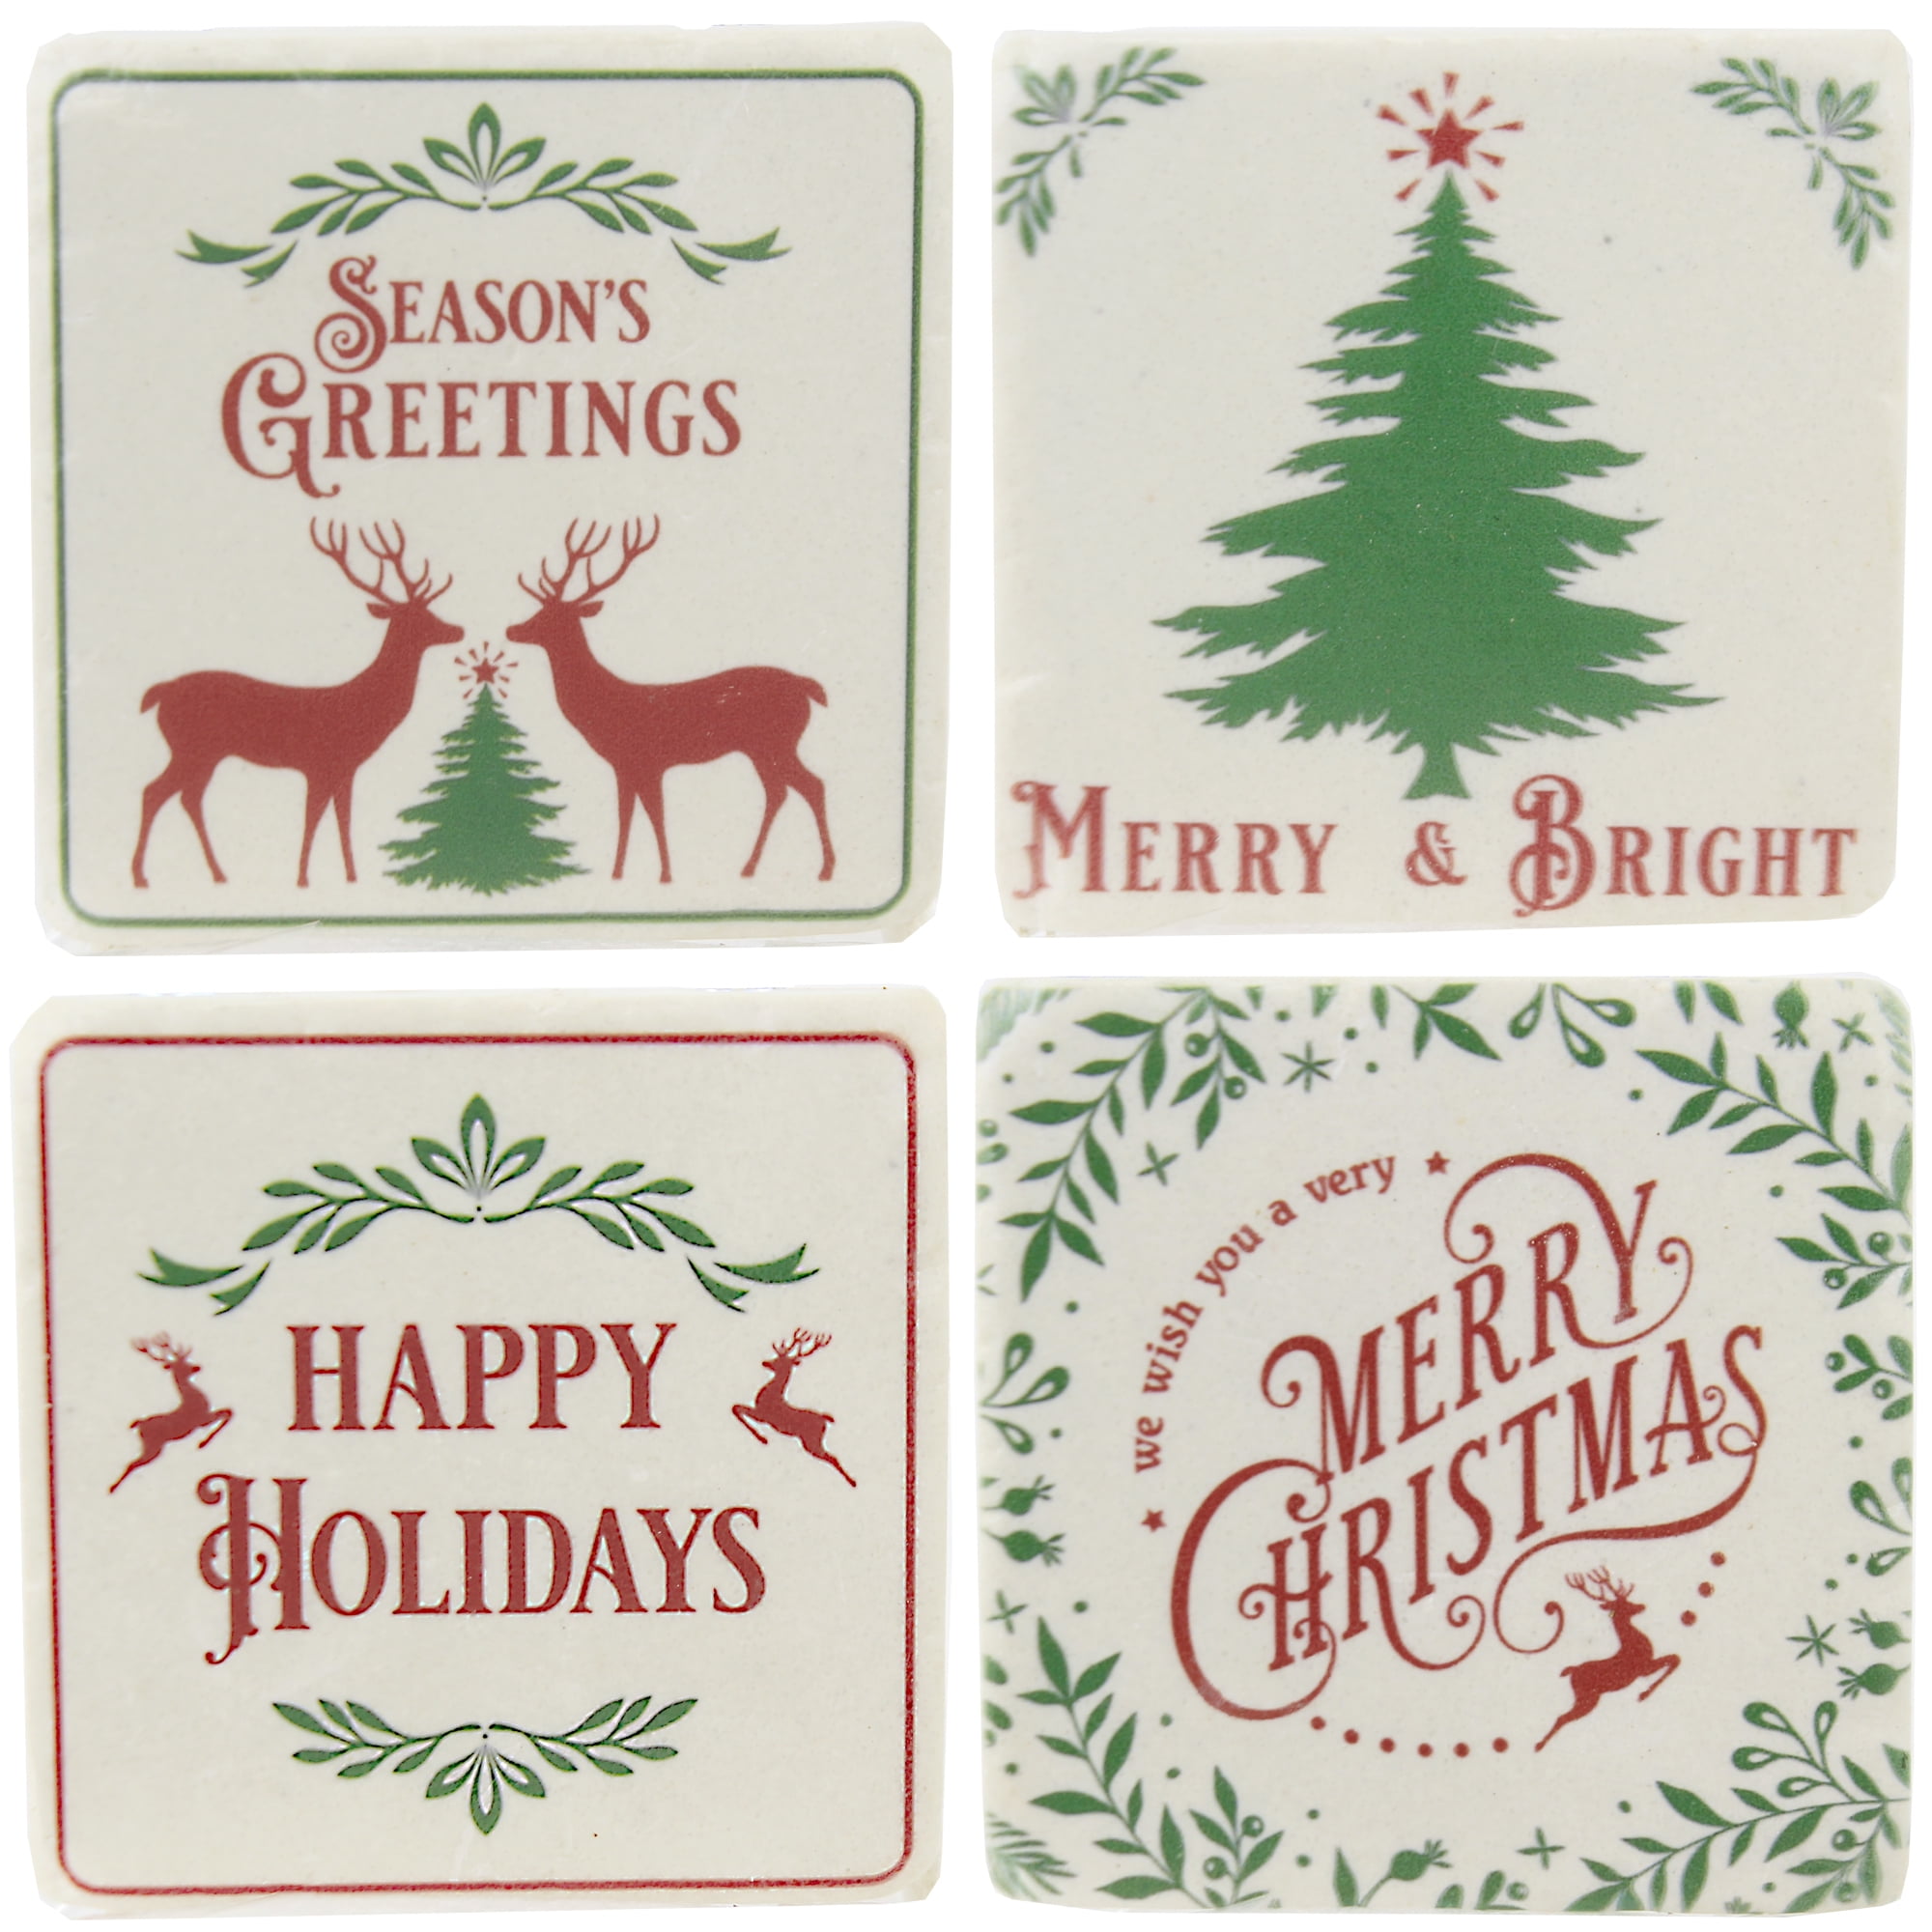 Handmade Gift Set Hostess Gift Set of 4 Fabric Coasters Coasters- Christmas FREE Shipping in USa PINE TREES